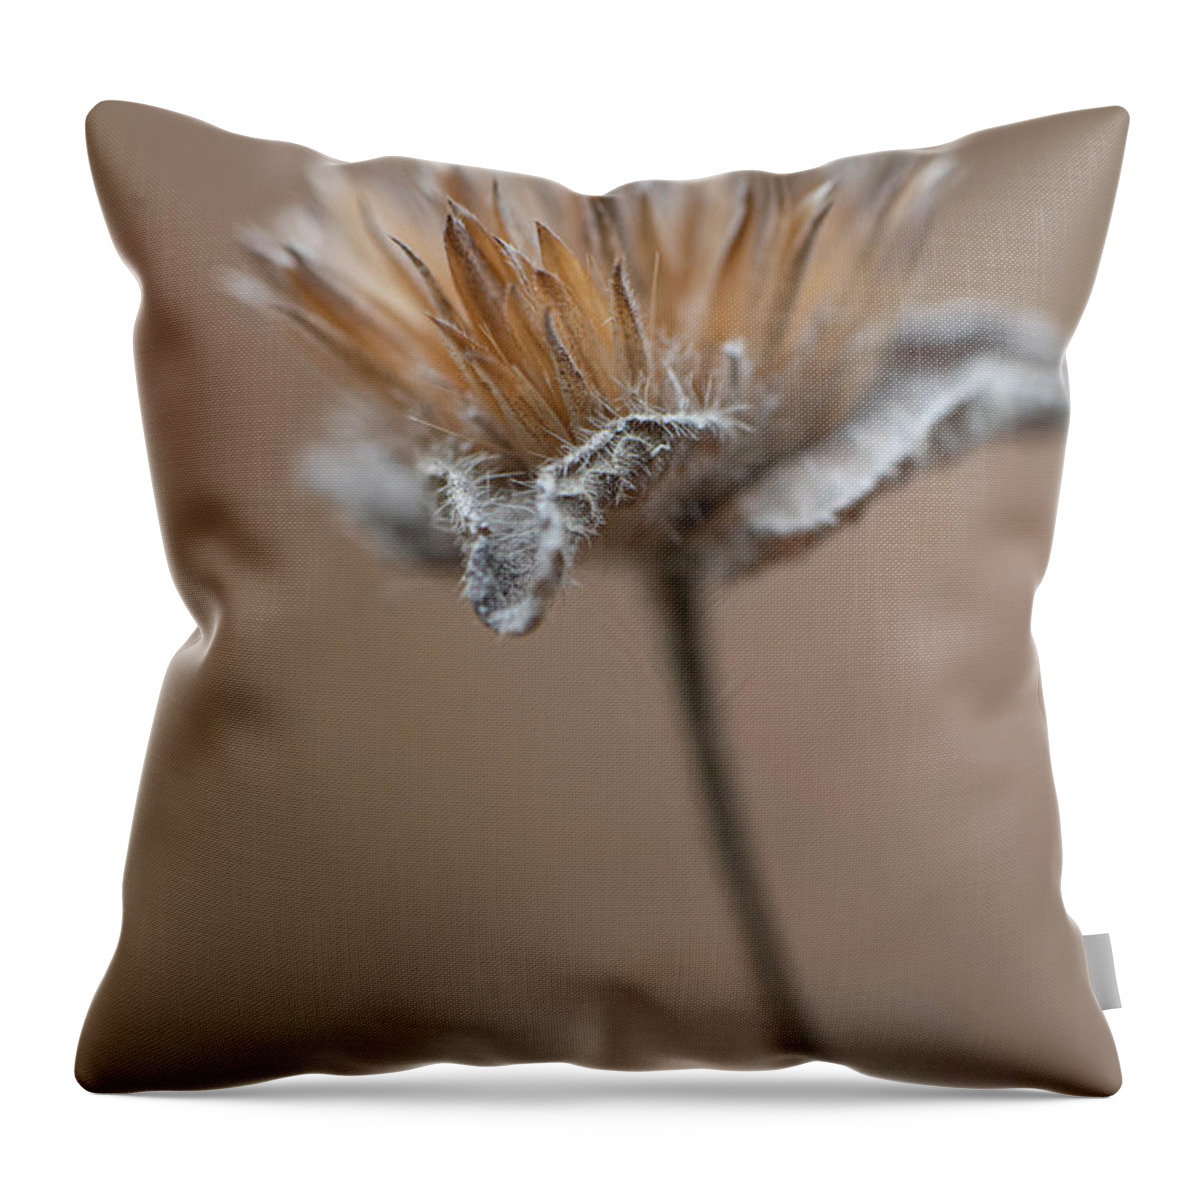 Autumn Throw Pillow featuring the photograph Autumn Dried Flower by Karen Rispin